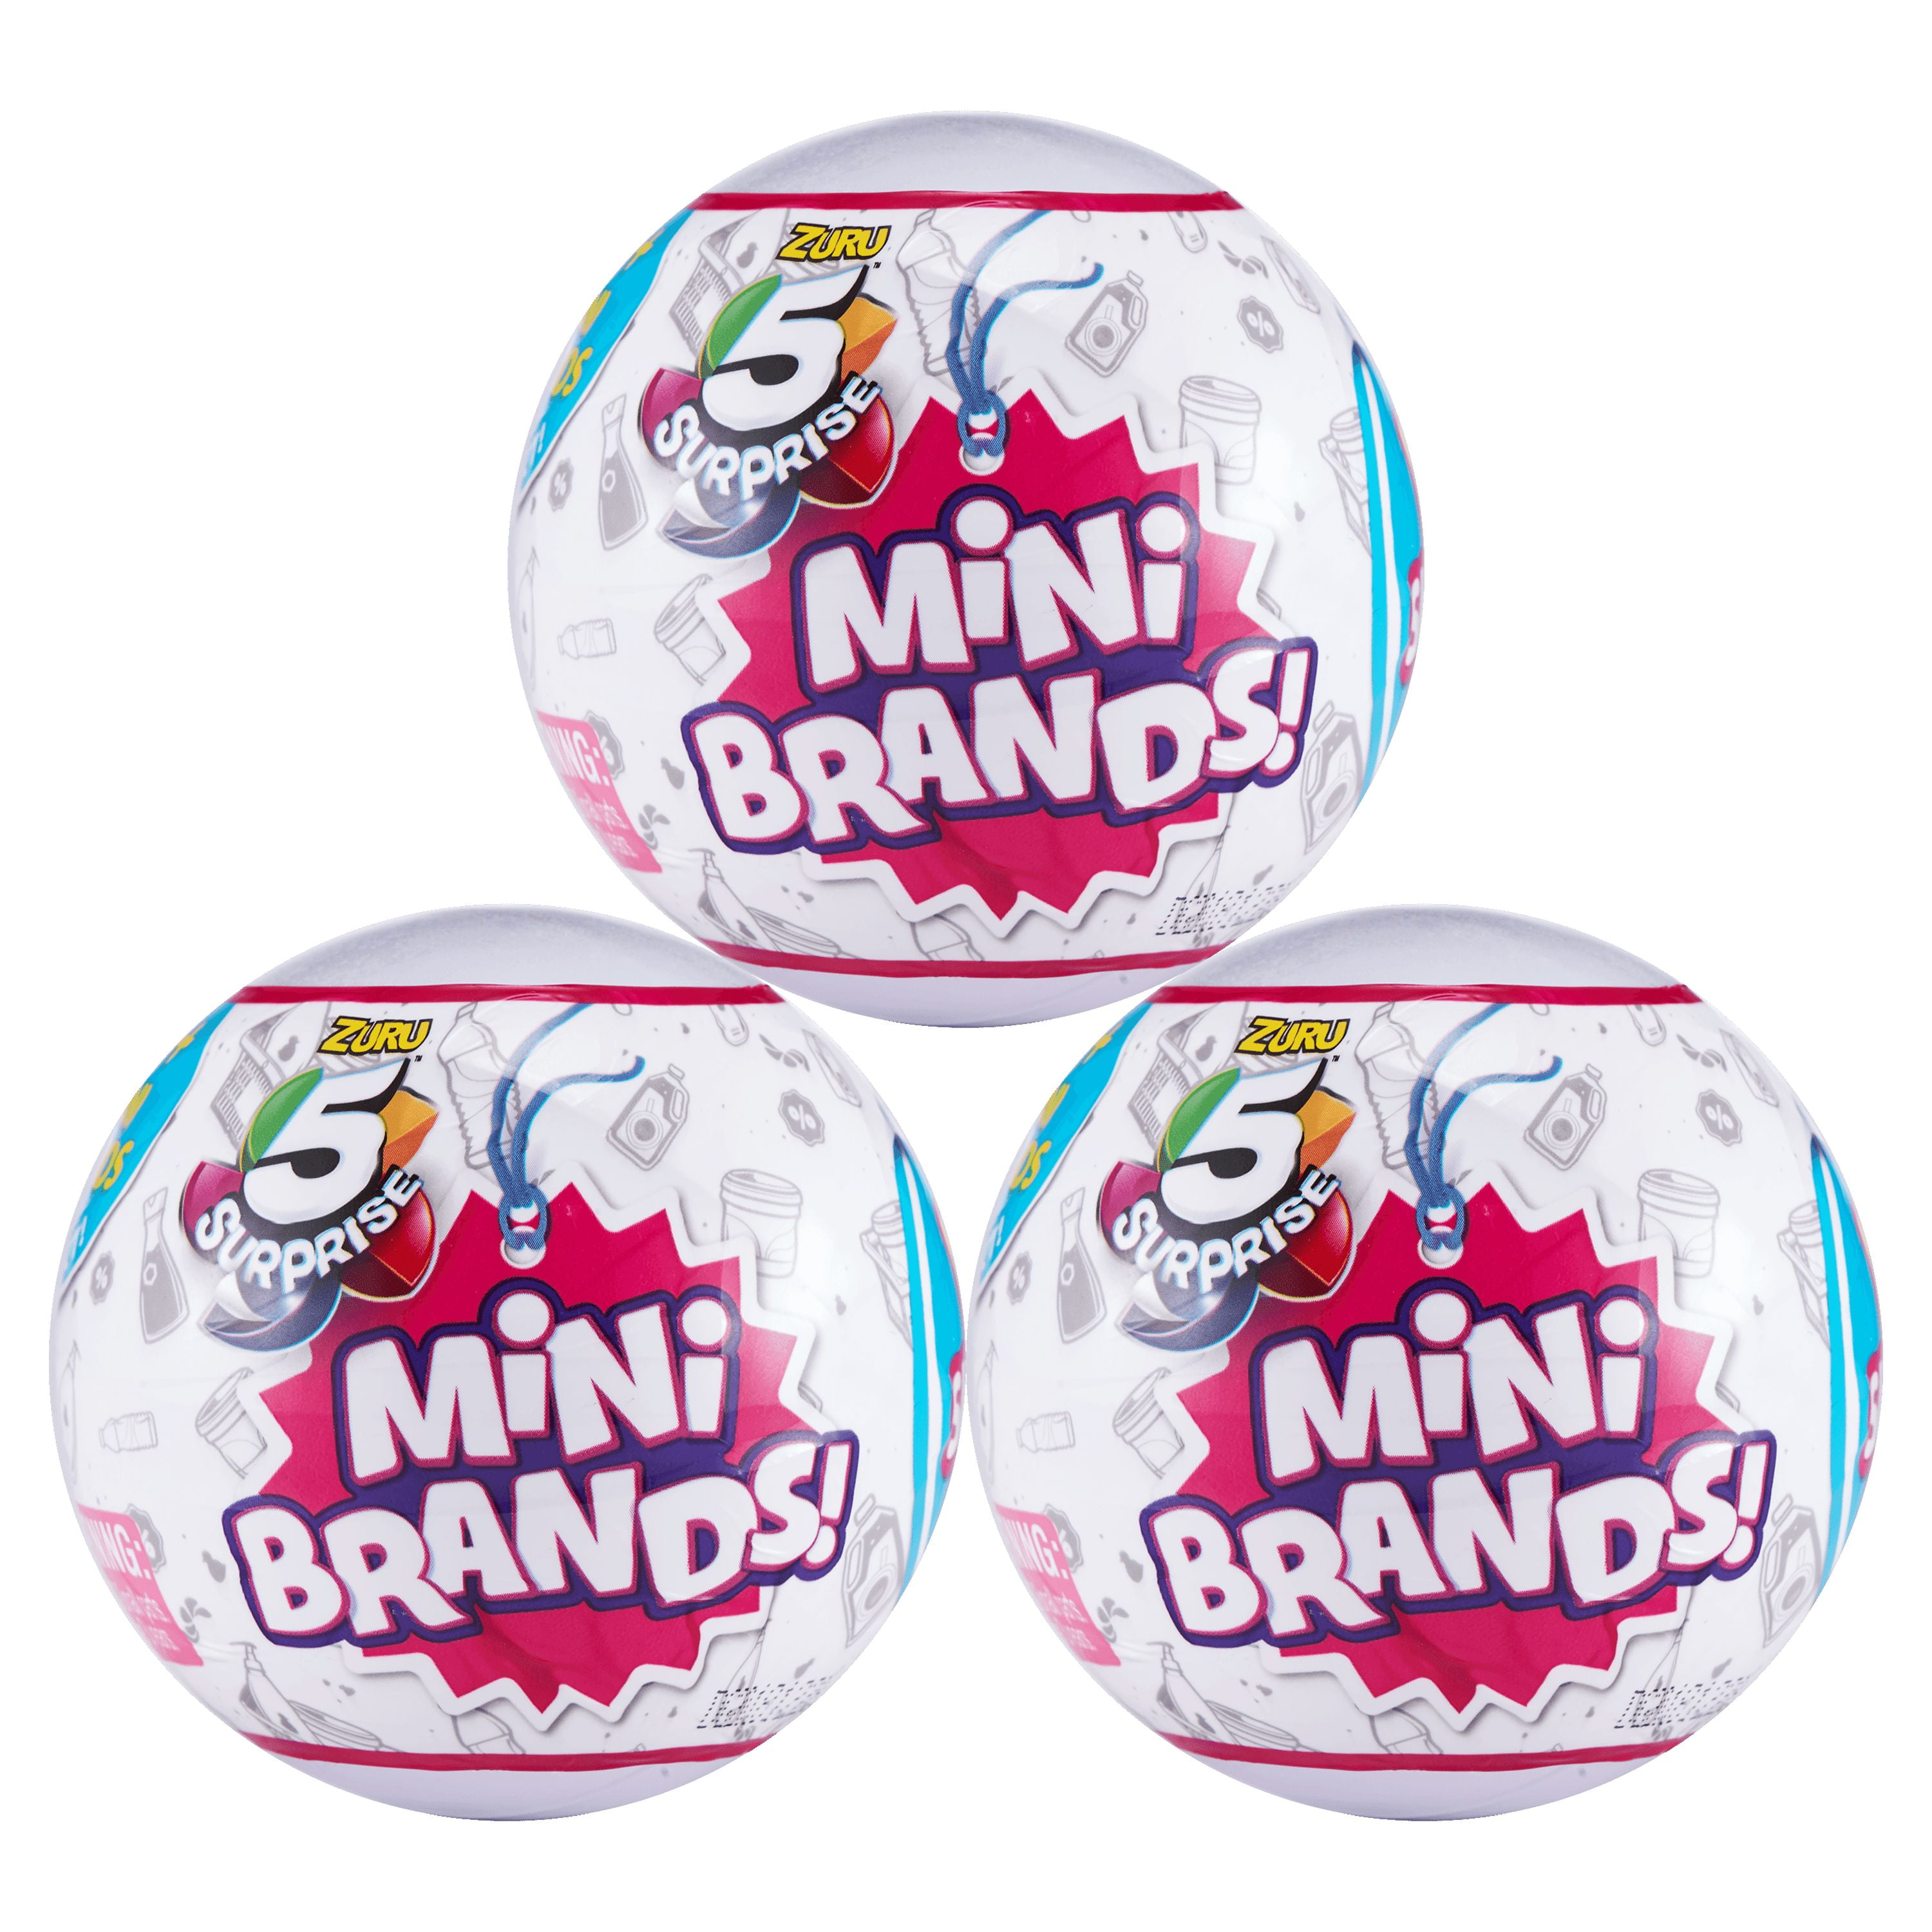 5 Surprise Mini Brands Electronic Mini Mart with 4 Mystery Mini Brands Playset by Zuru, Size: 4.00 x 5.00 x 12.00